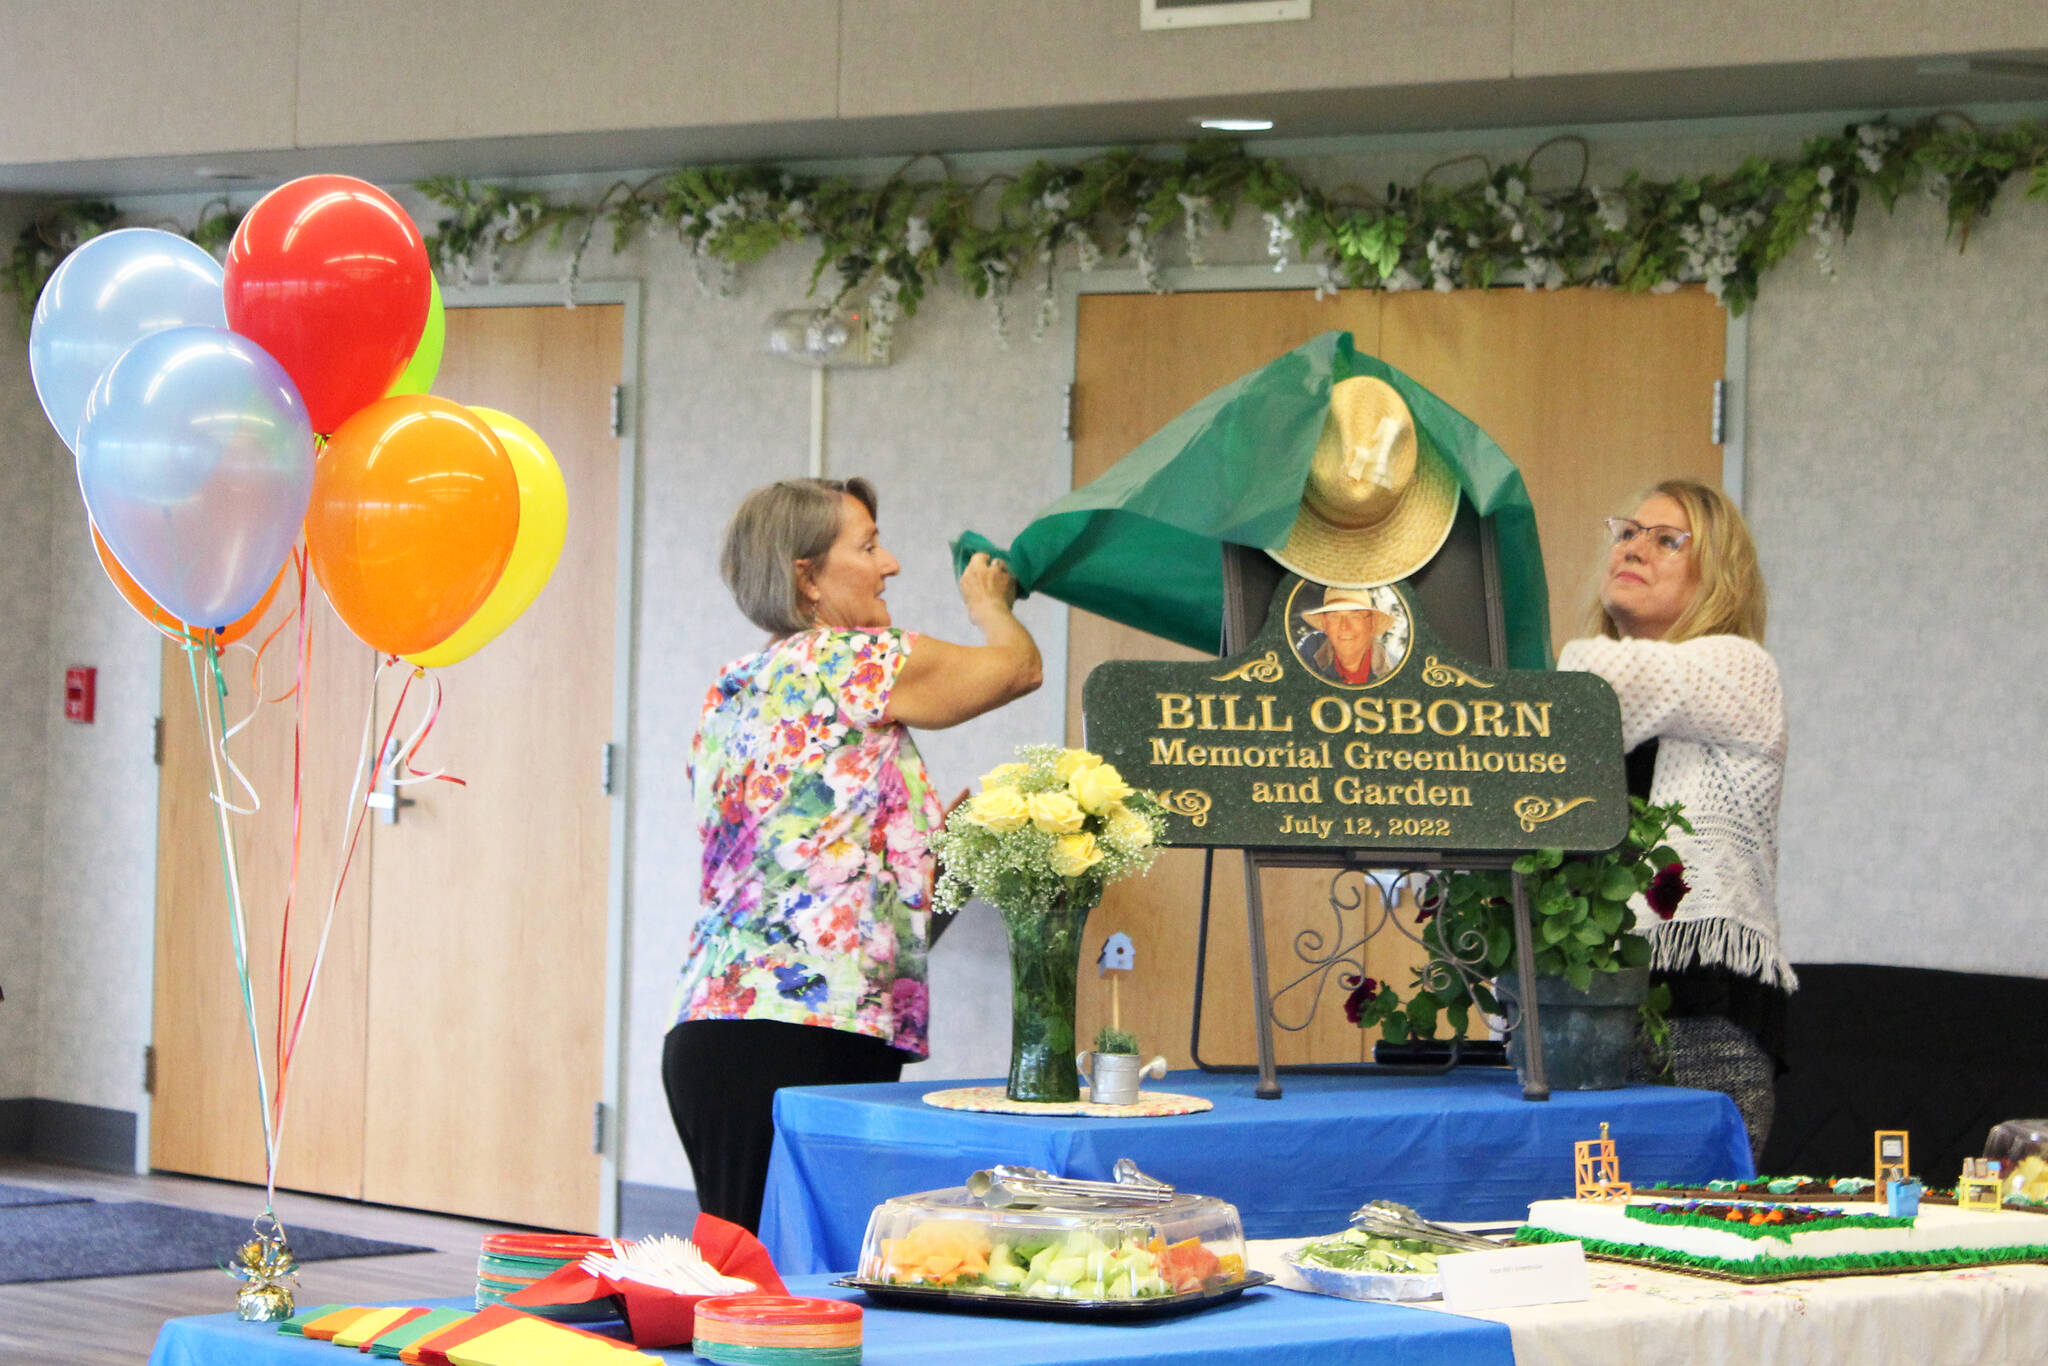 Vicke Kukowski (left) and Kathy Romain (right) unveil a plaque dedicating the Kenai Senior Center’s greenhouse to Bill Osborn during a ceremony on Tuesday, July 12, 2022 in Kenai, Alaska. (Ashlyn O’Hara/Peninsula Clarion)